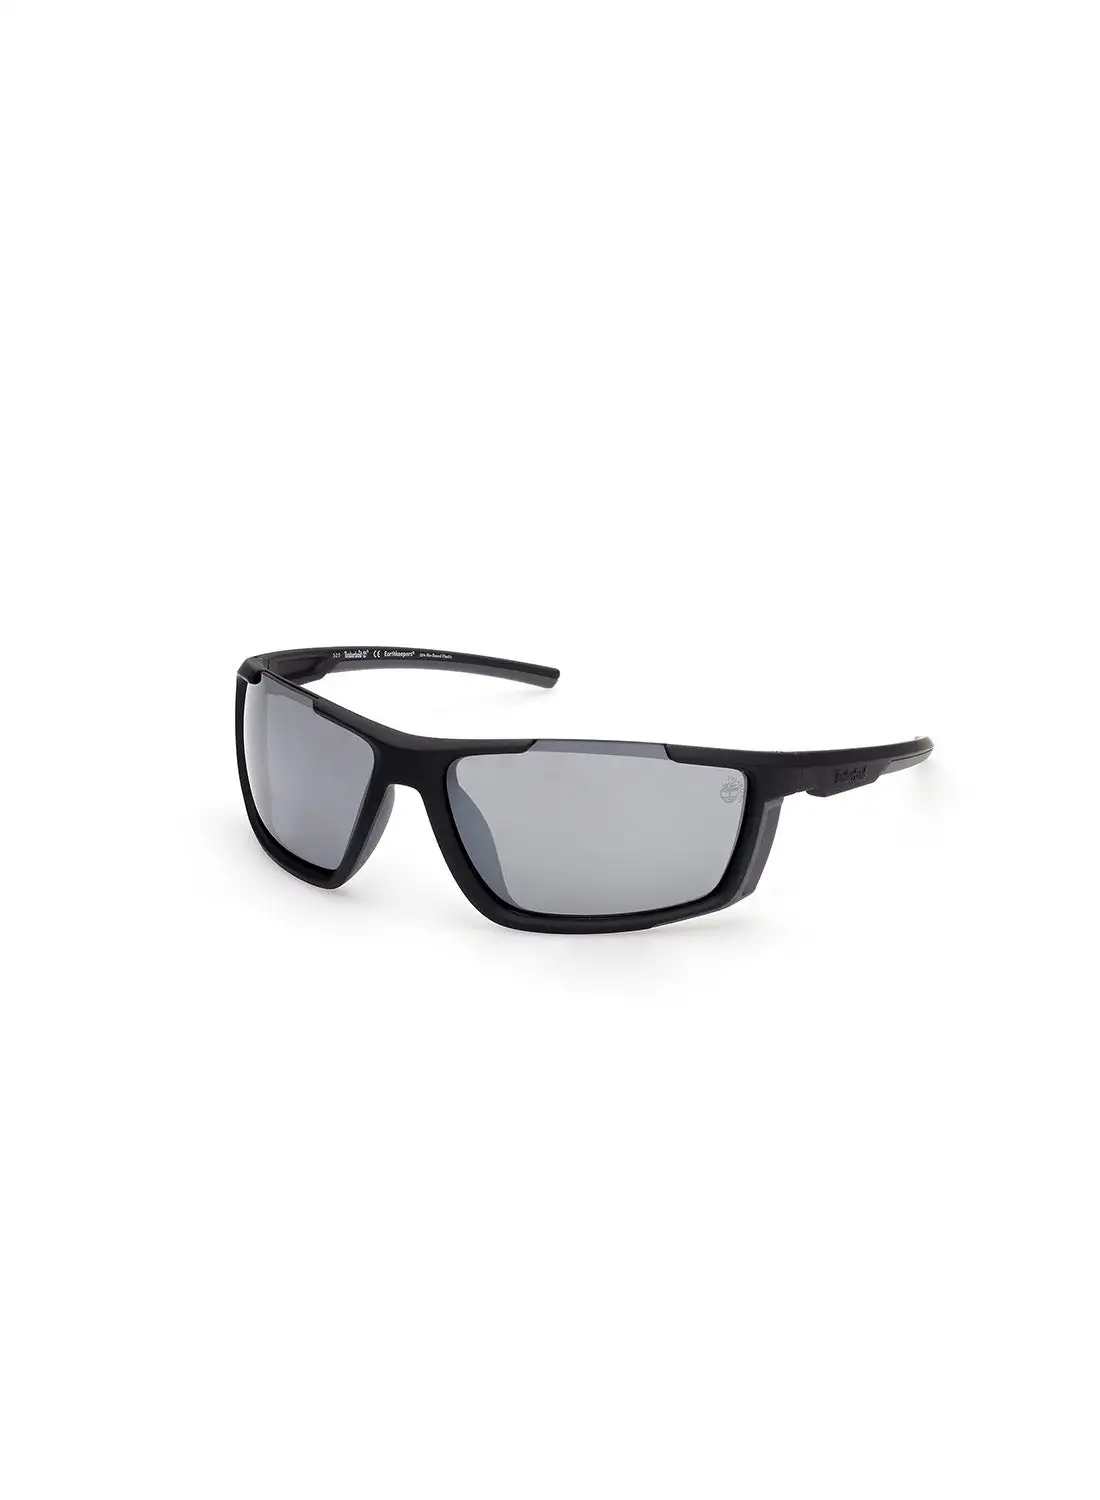 Timberland Men's Polarized Rectangular Sunglasses - TB925202D68 - Lens Size: 68 Mm